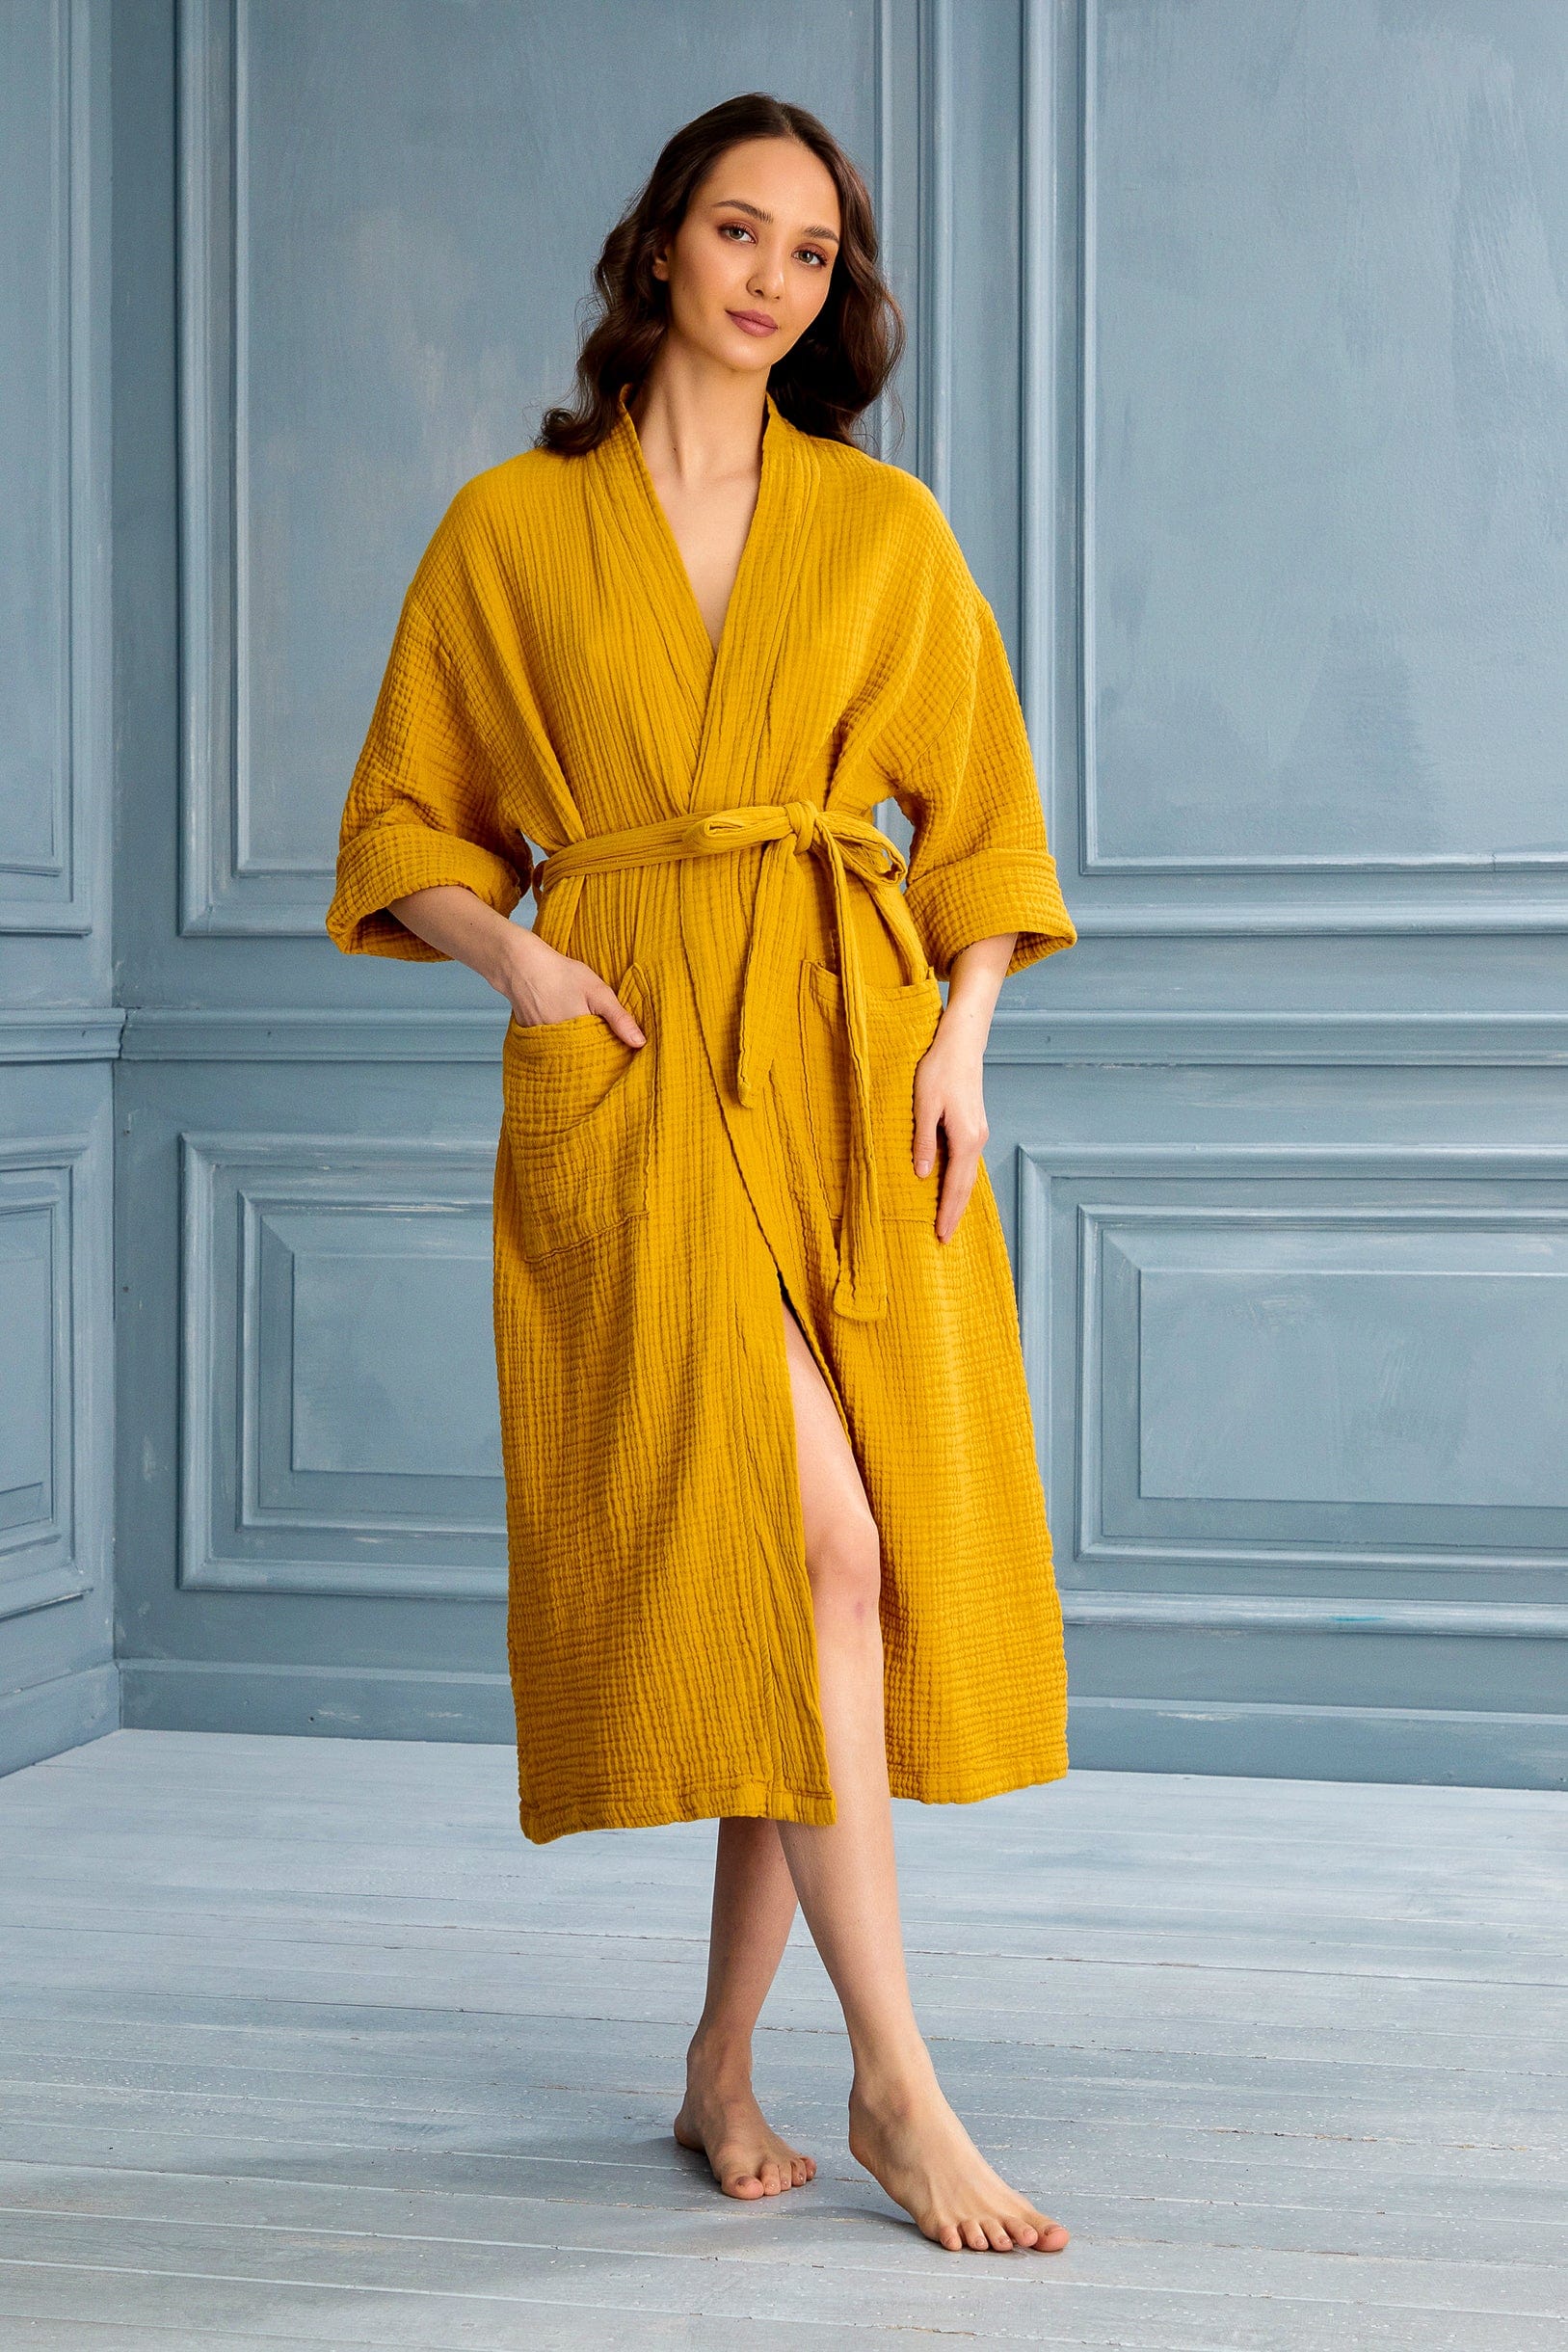 Garde-robe Nice&Easy 120 x 50 x 203 cm CASIBEL